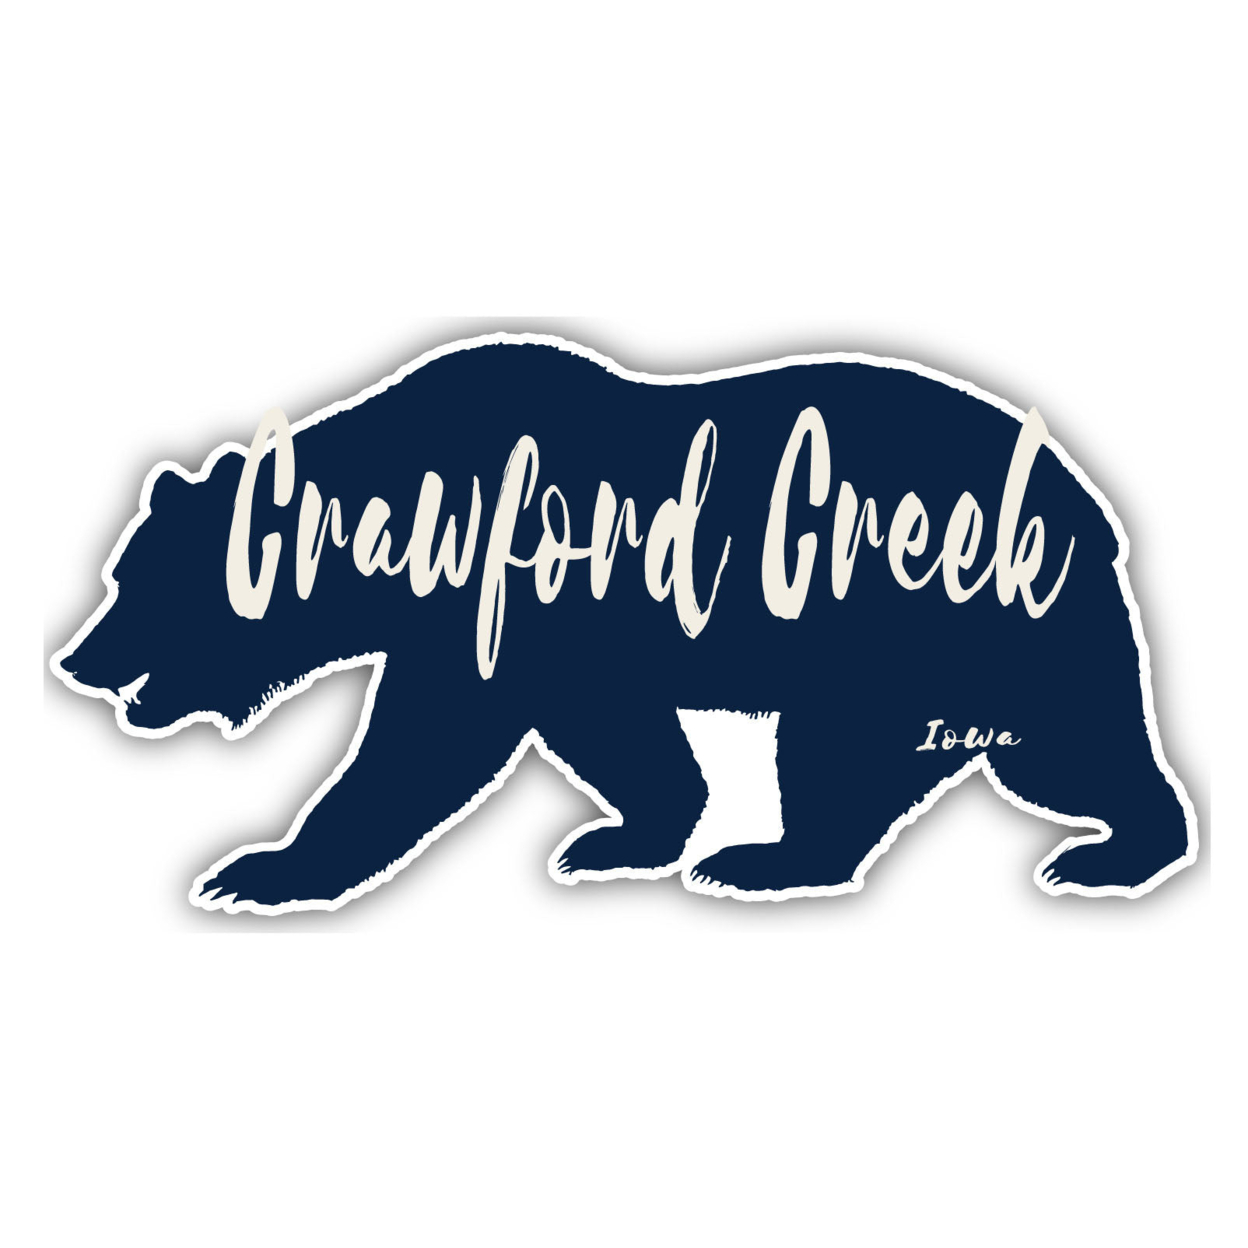 Crawford Creek Iowa Souvenir Decorative Stickers (Choose Theme And Size) - 4-Pack, 10-Inch, Bear